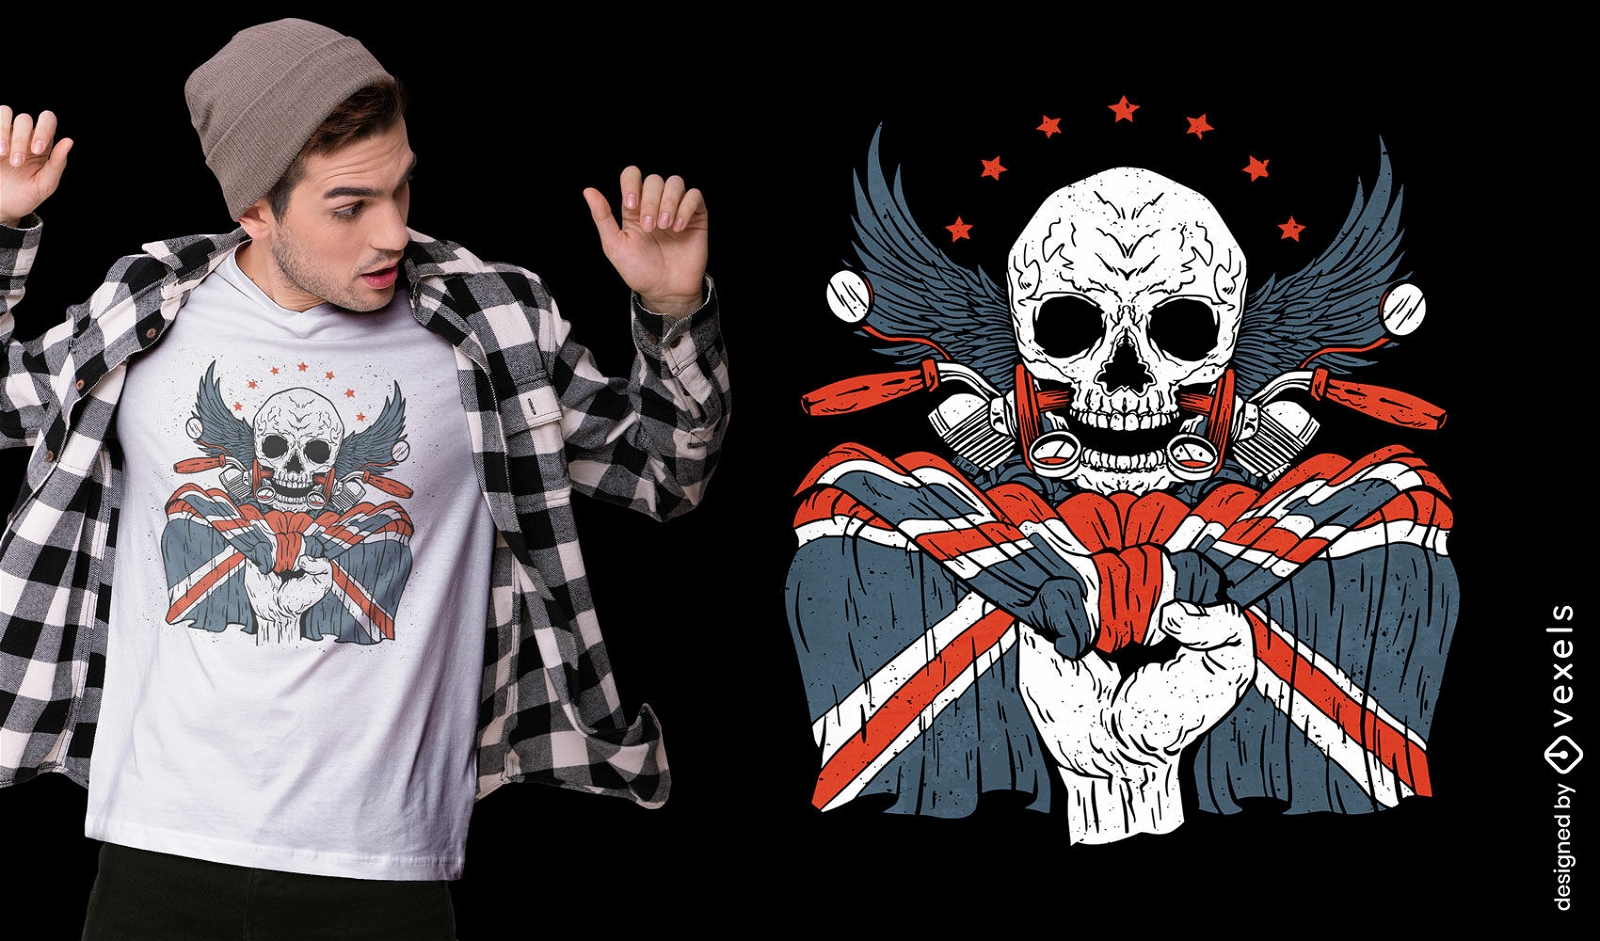 British flag and skull t-shirt design